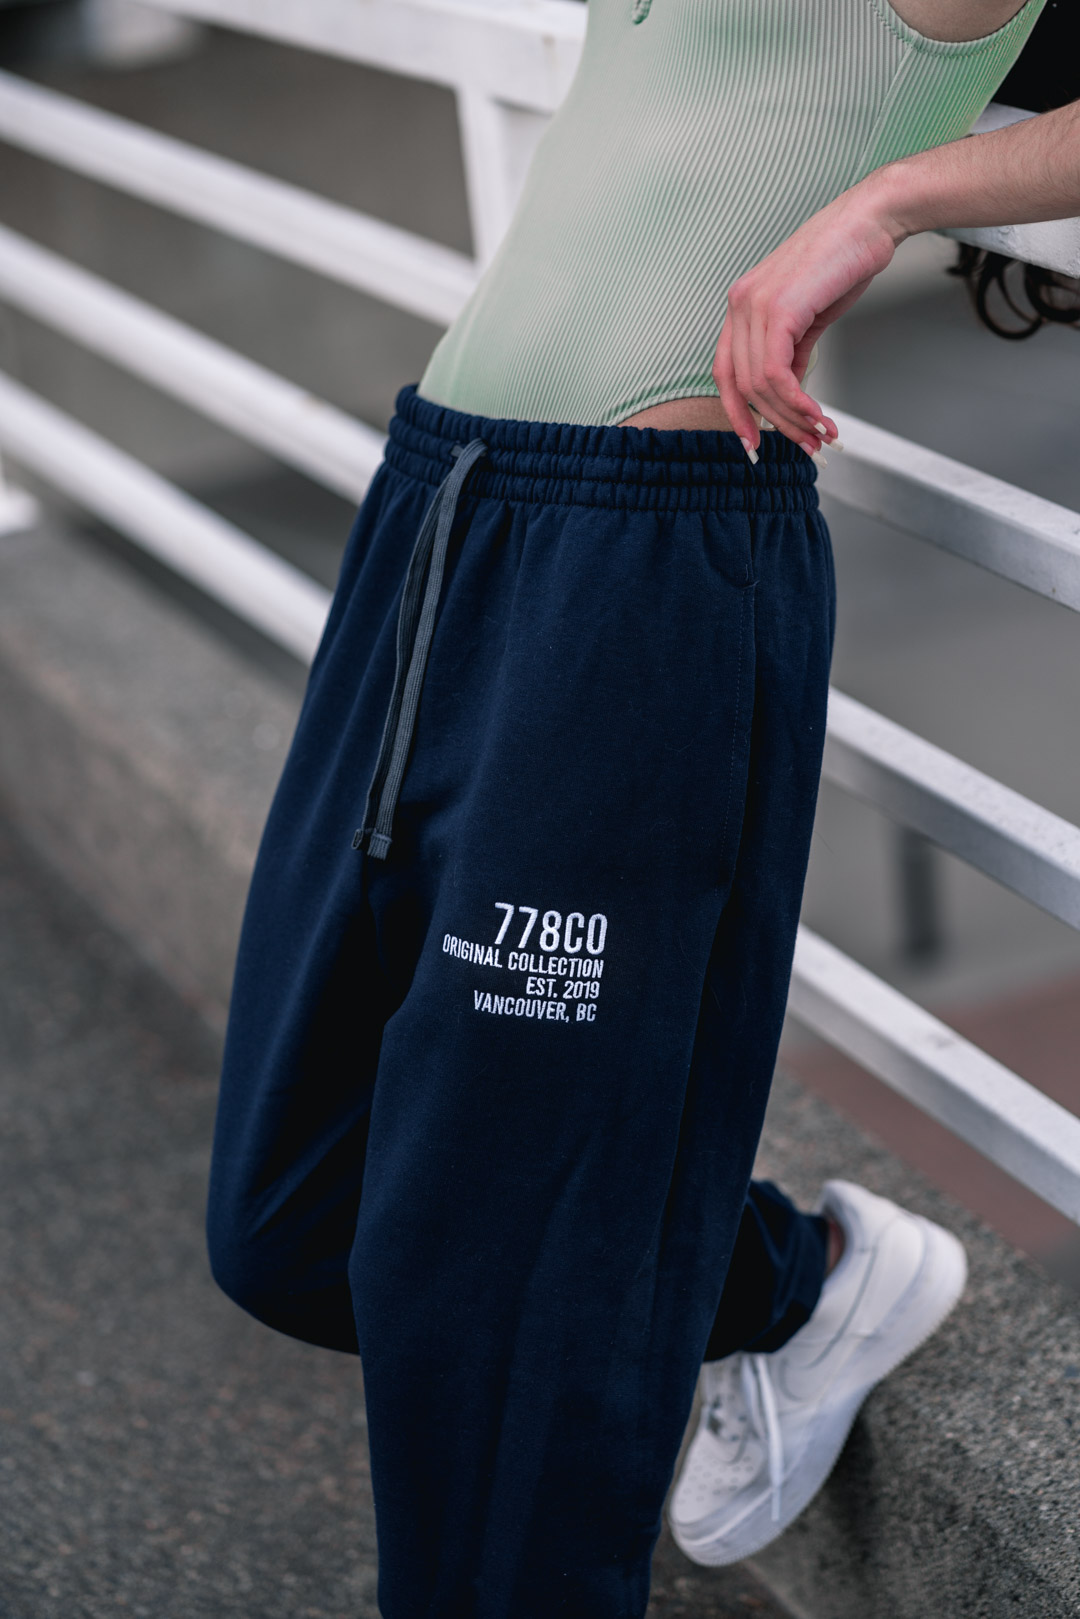 778CO - streetwear clothing